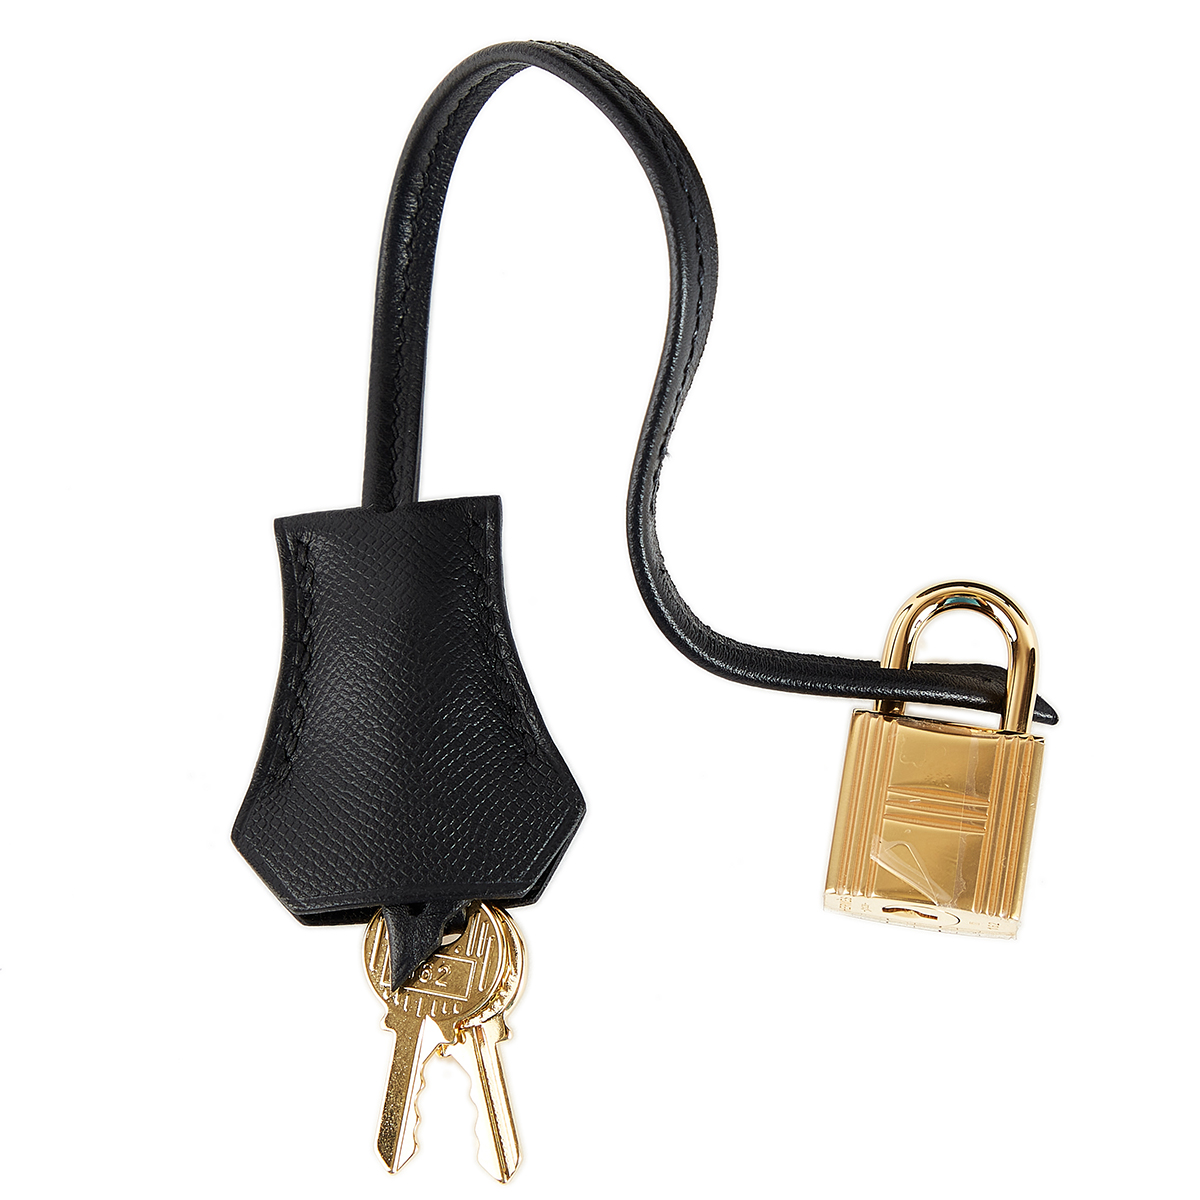 The New Hermes Birkin Sellier handbag • Petite in Paris  Hermes birkin,  Hermes birkin handbags, Hermes bag birkin